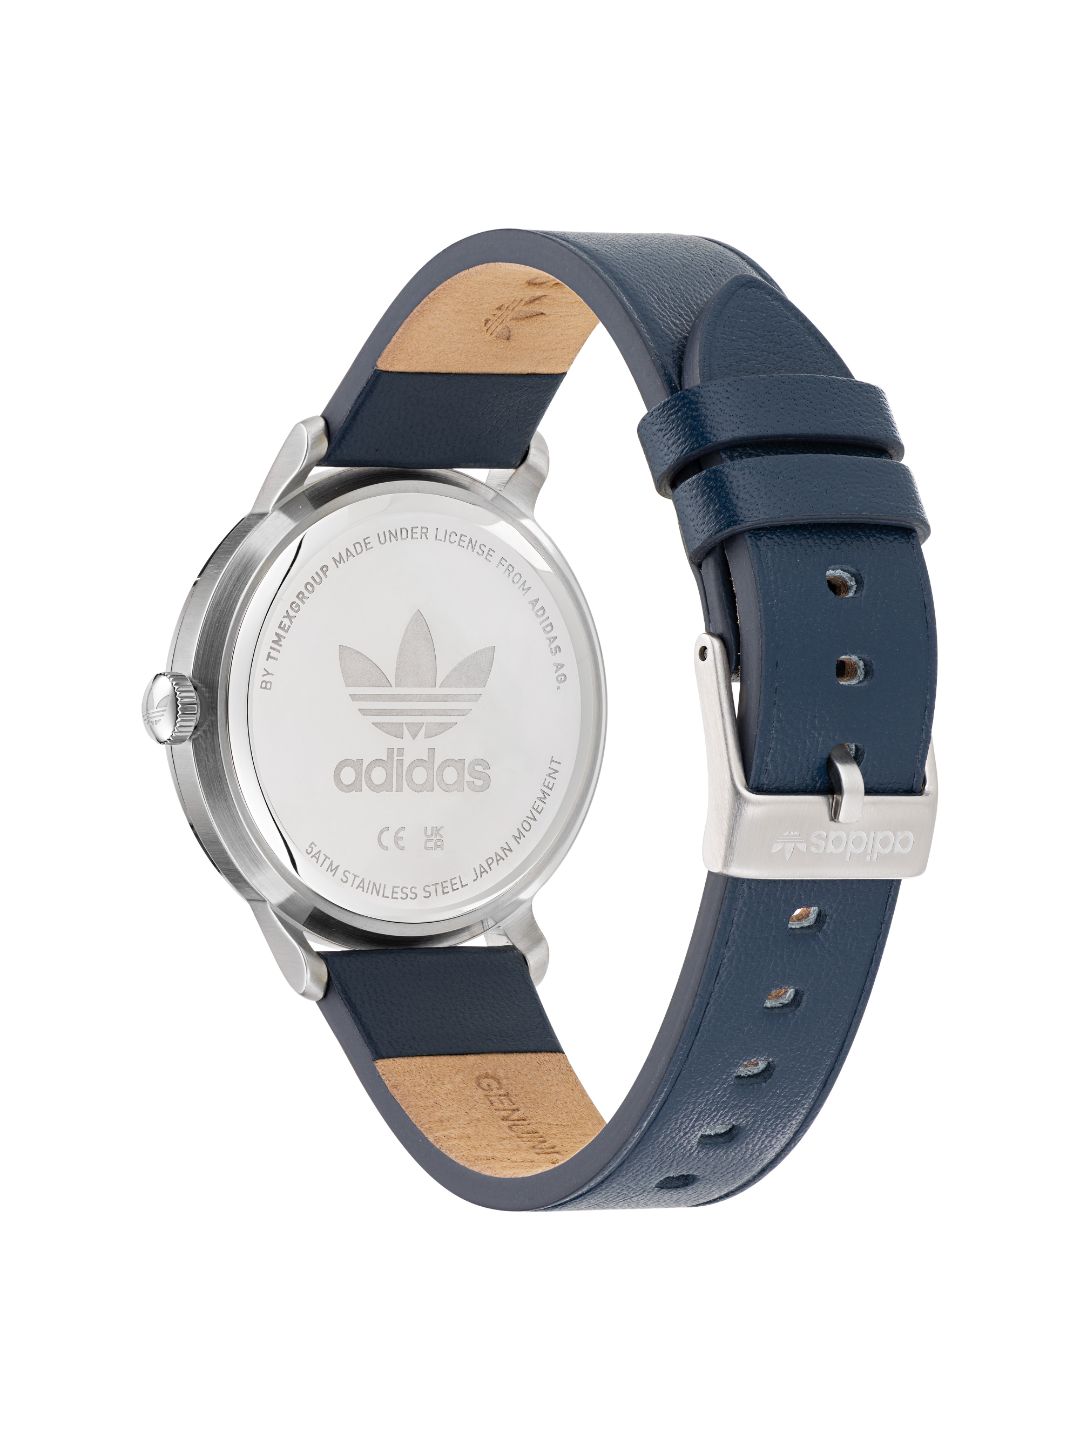 Adidas Originals Blue Dial Unisex Watch - AOSY22529